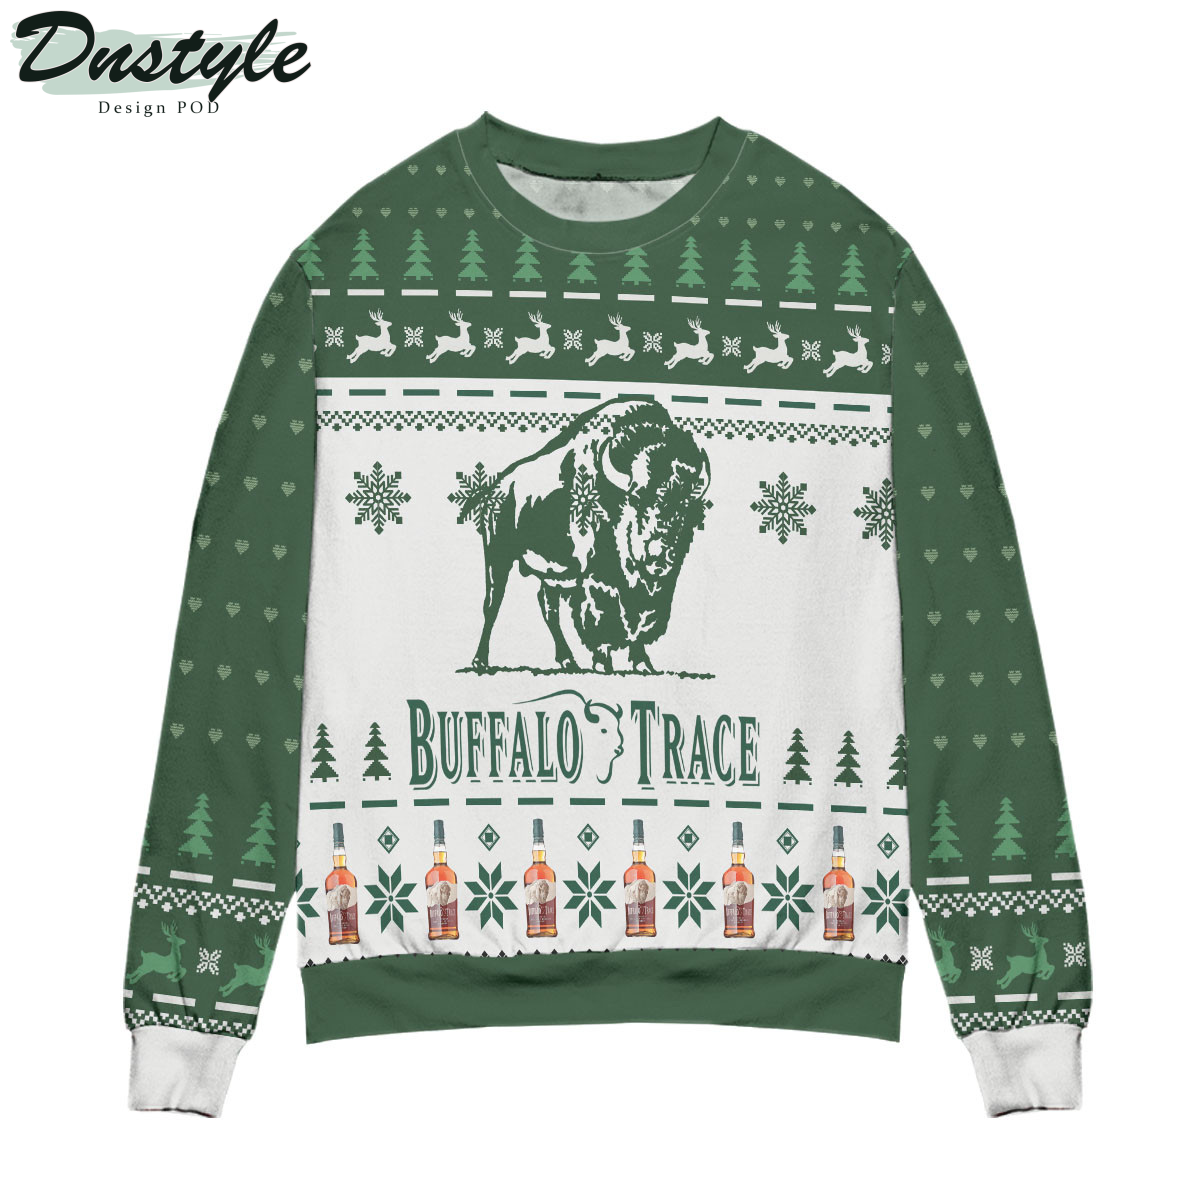 Christmas Wrapping Presents Team Ugly Christmas Sweater